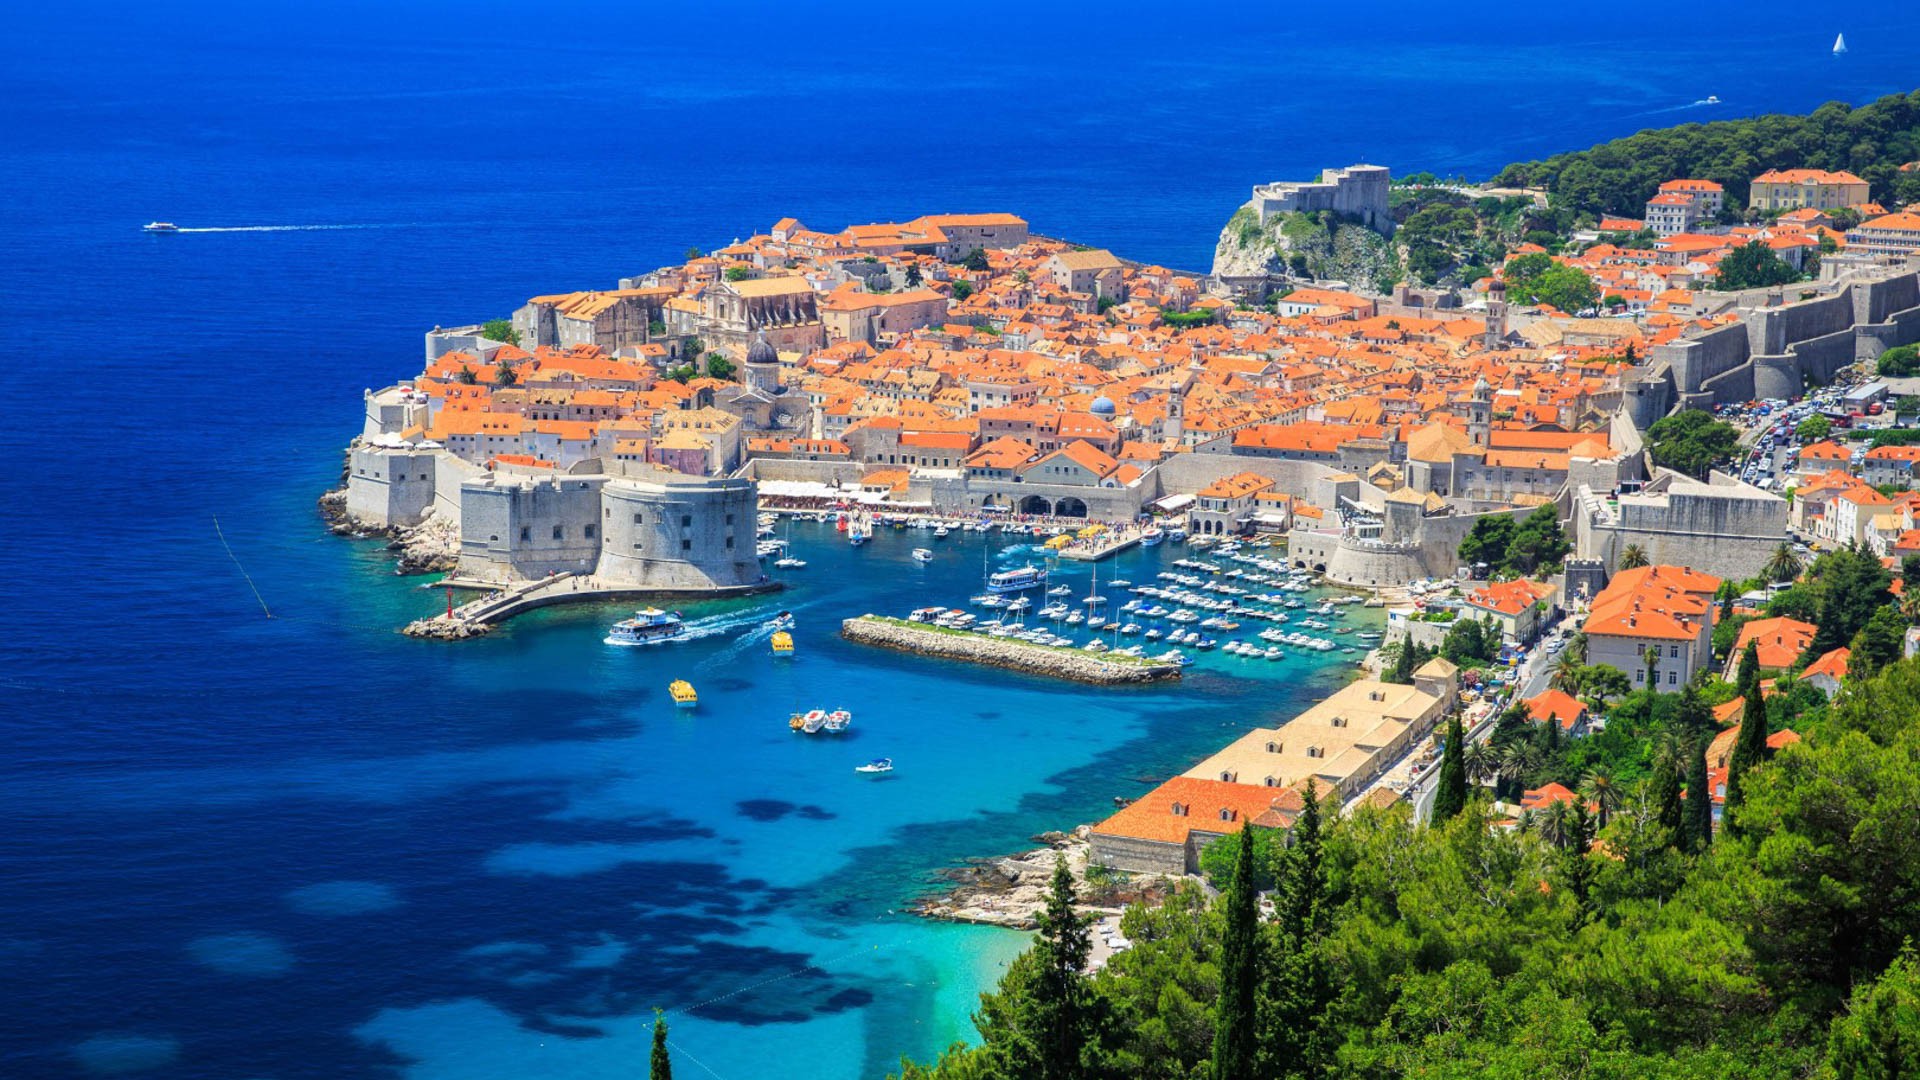 Dubrovnik - Adriatic Sea | Croatia Cruise Croatia Cruise